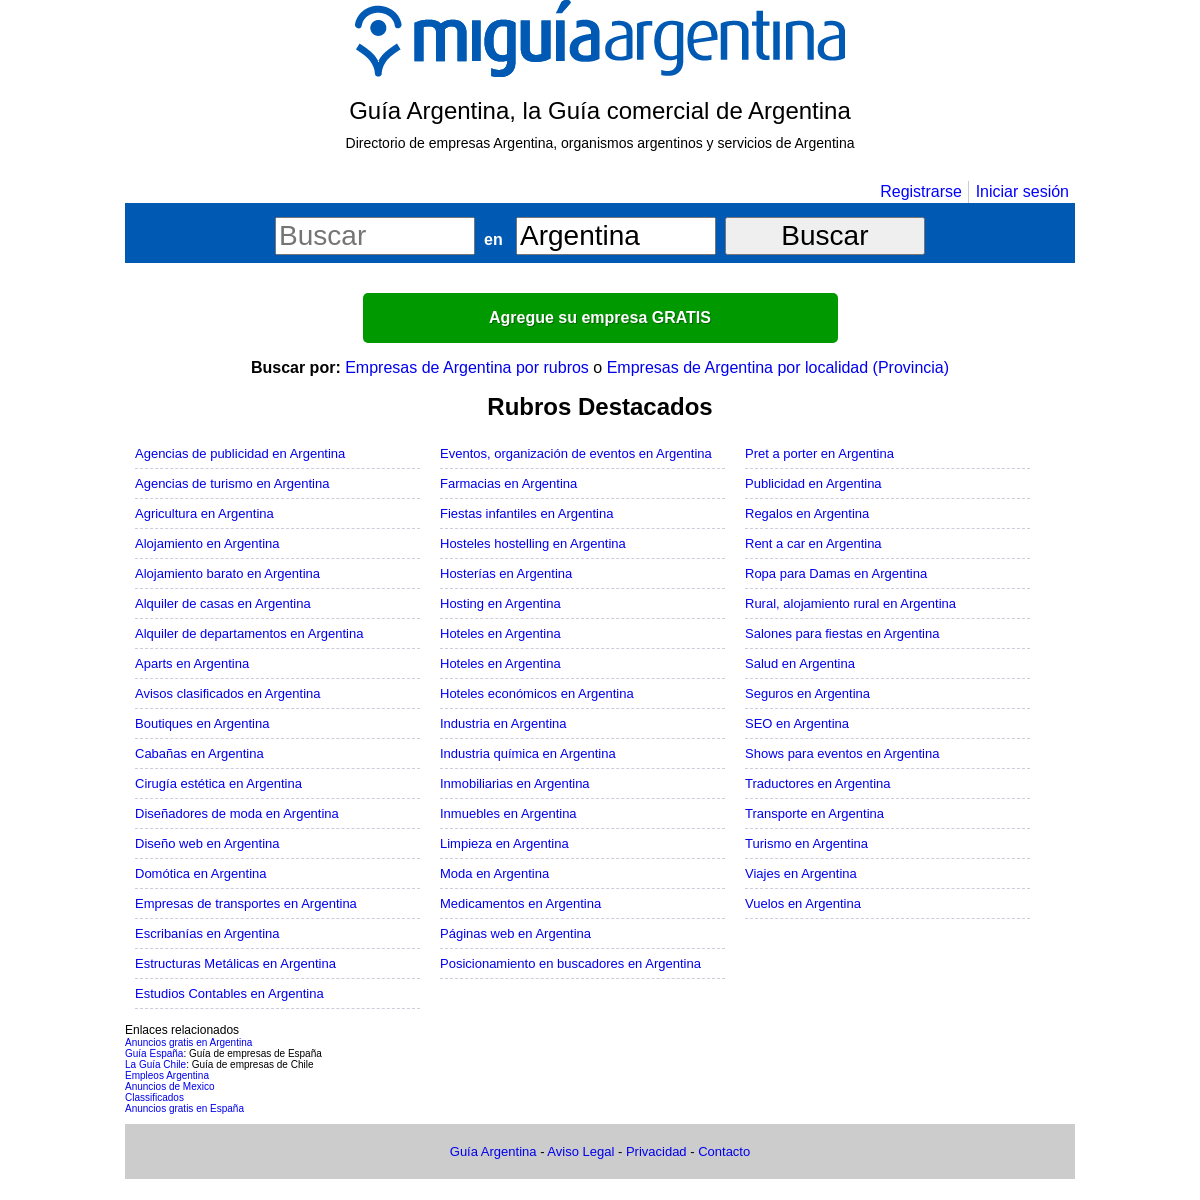 A complete backup of miguiaargentina.com.ar